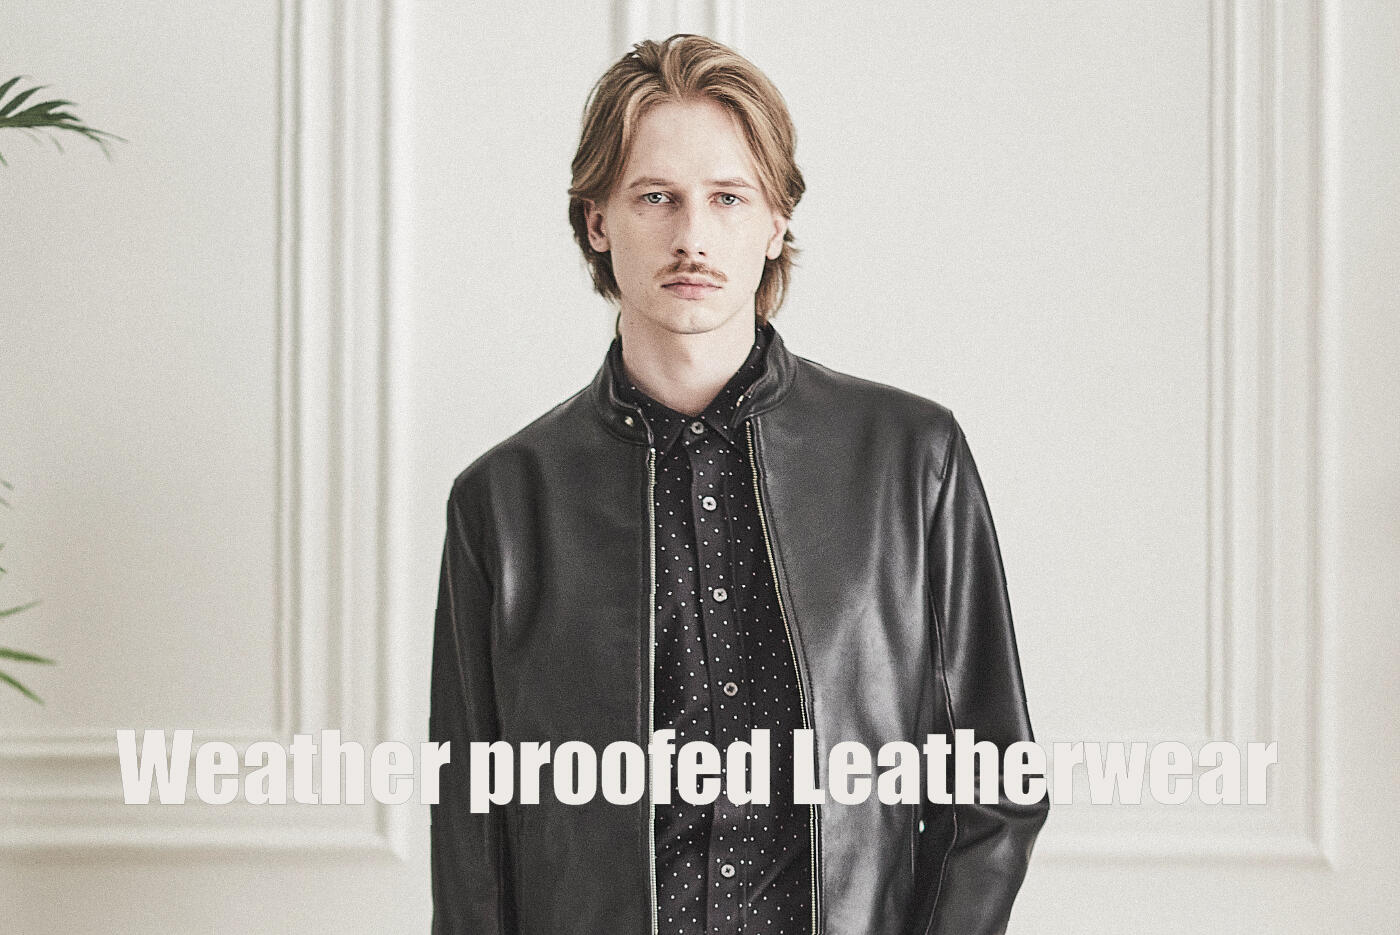 Weather proofed Leatherwear